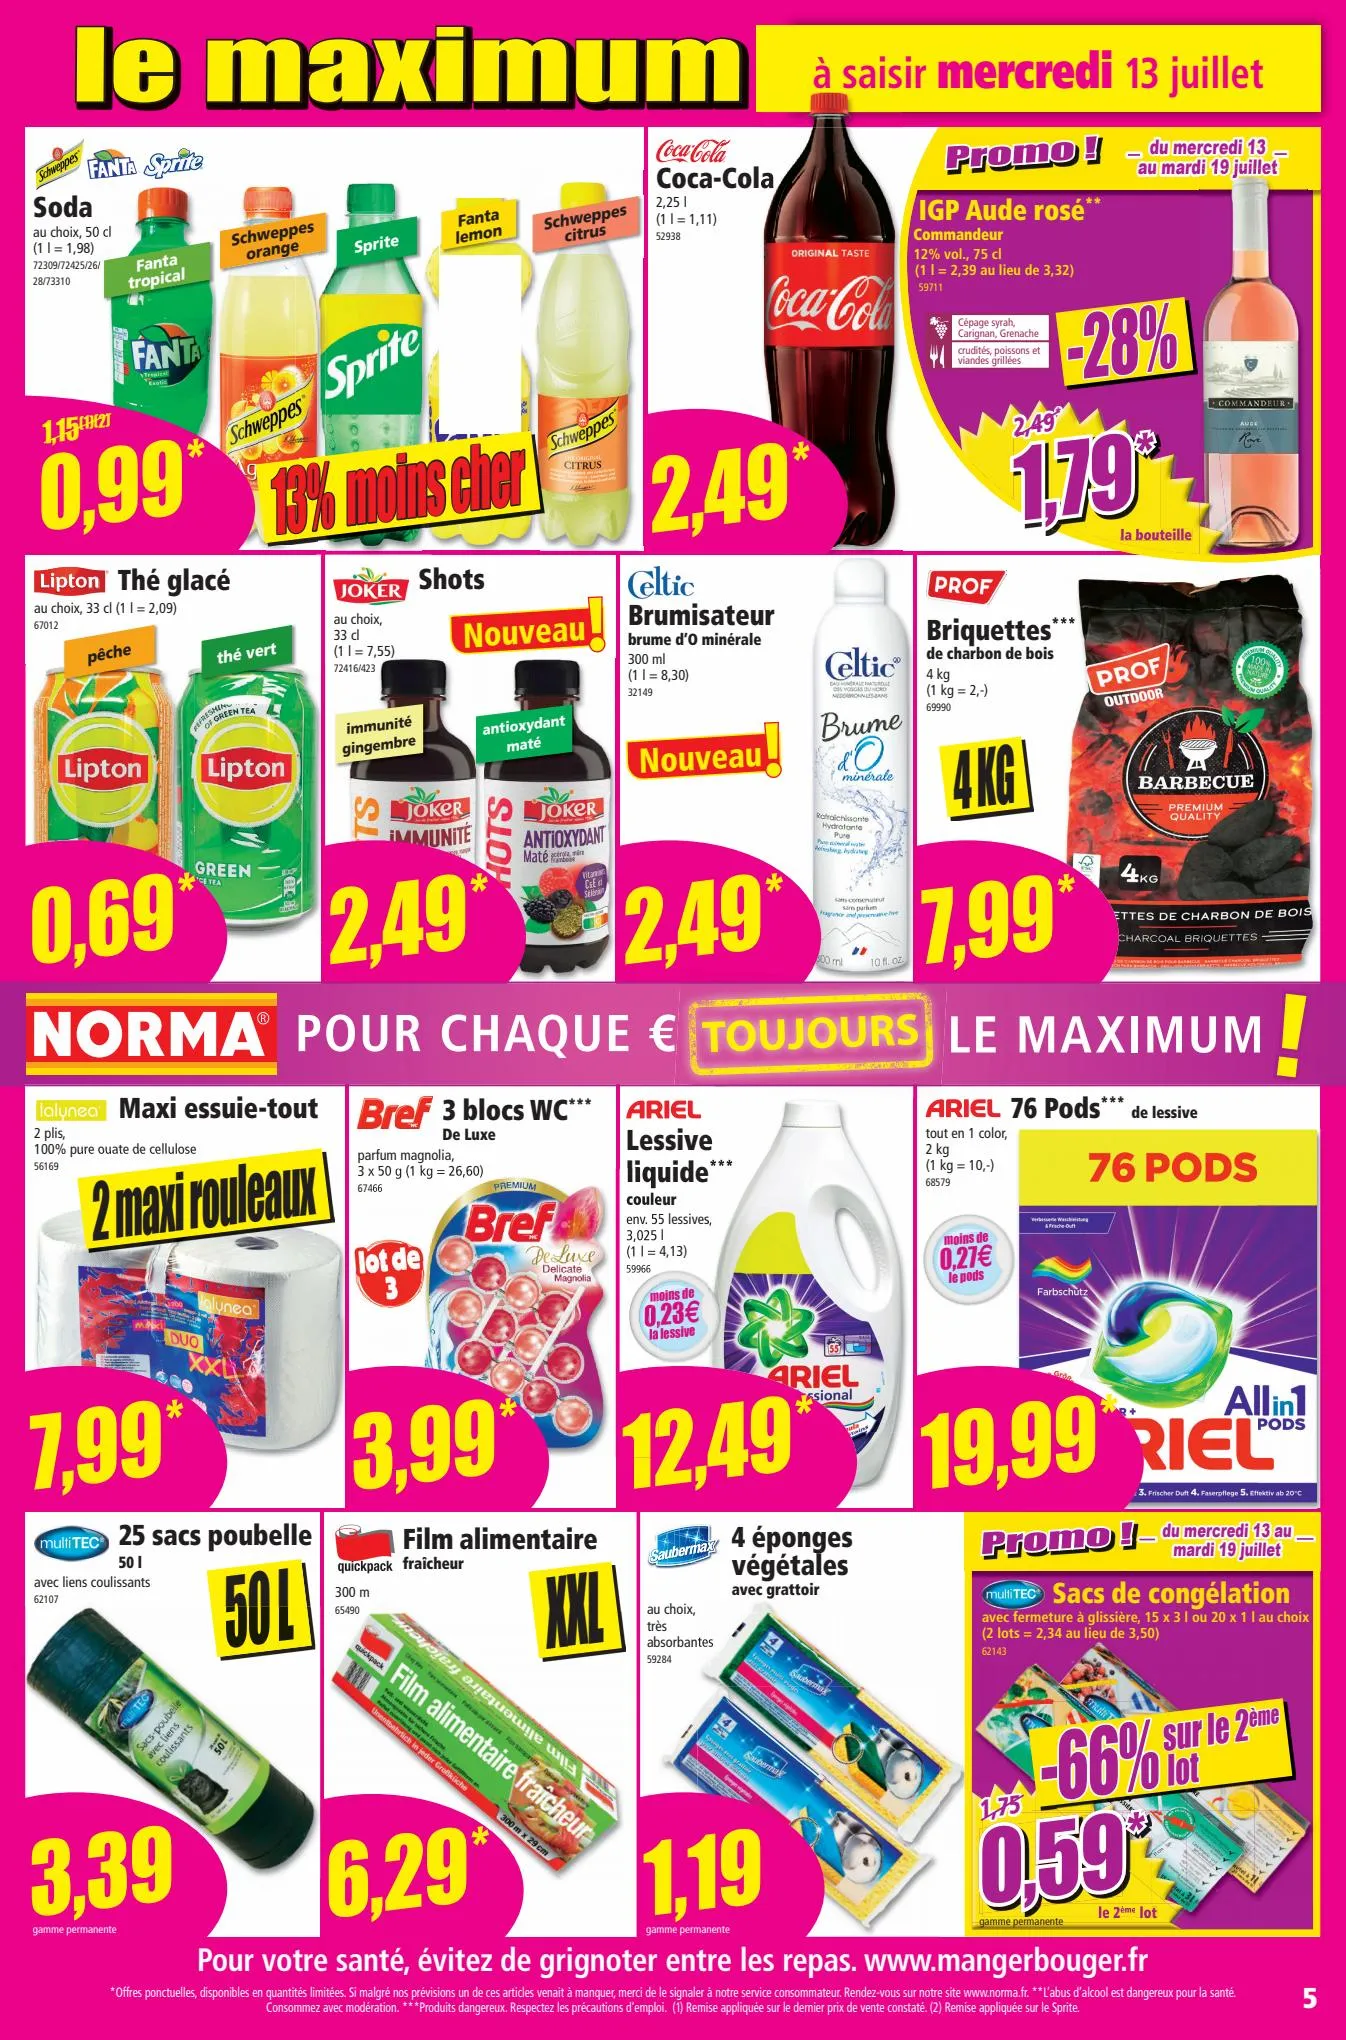 Catalogue Catalogue Norma, page 00005